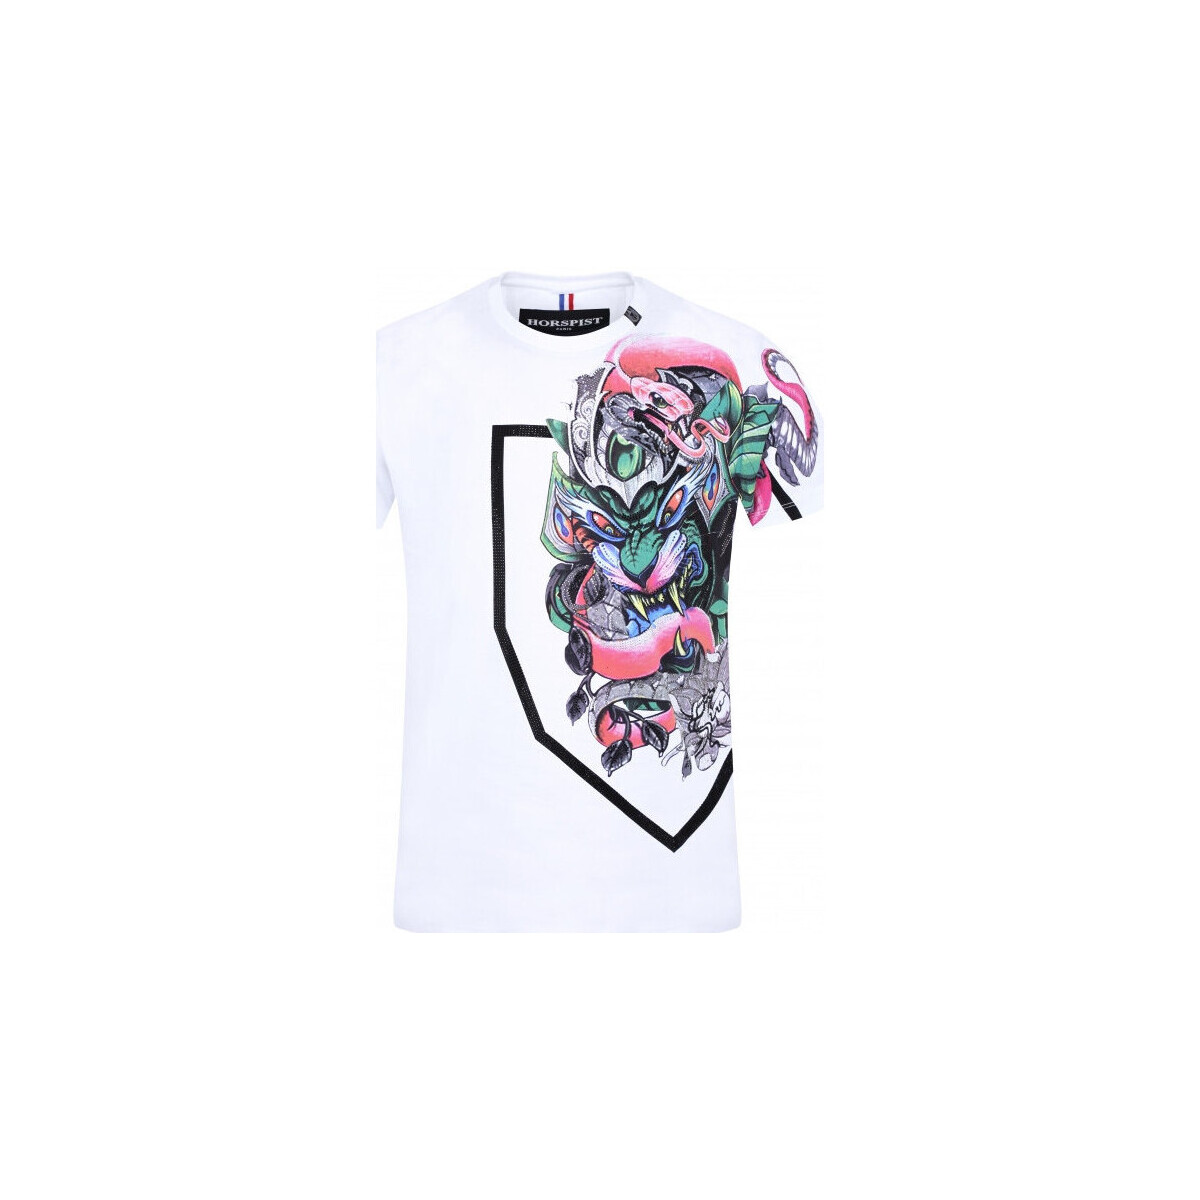 Vêtements Homme Rose H&M Tee-shirts Horspist STUNT Blanc